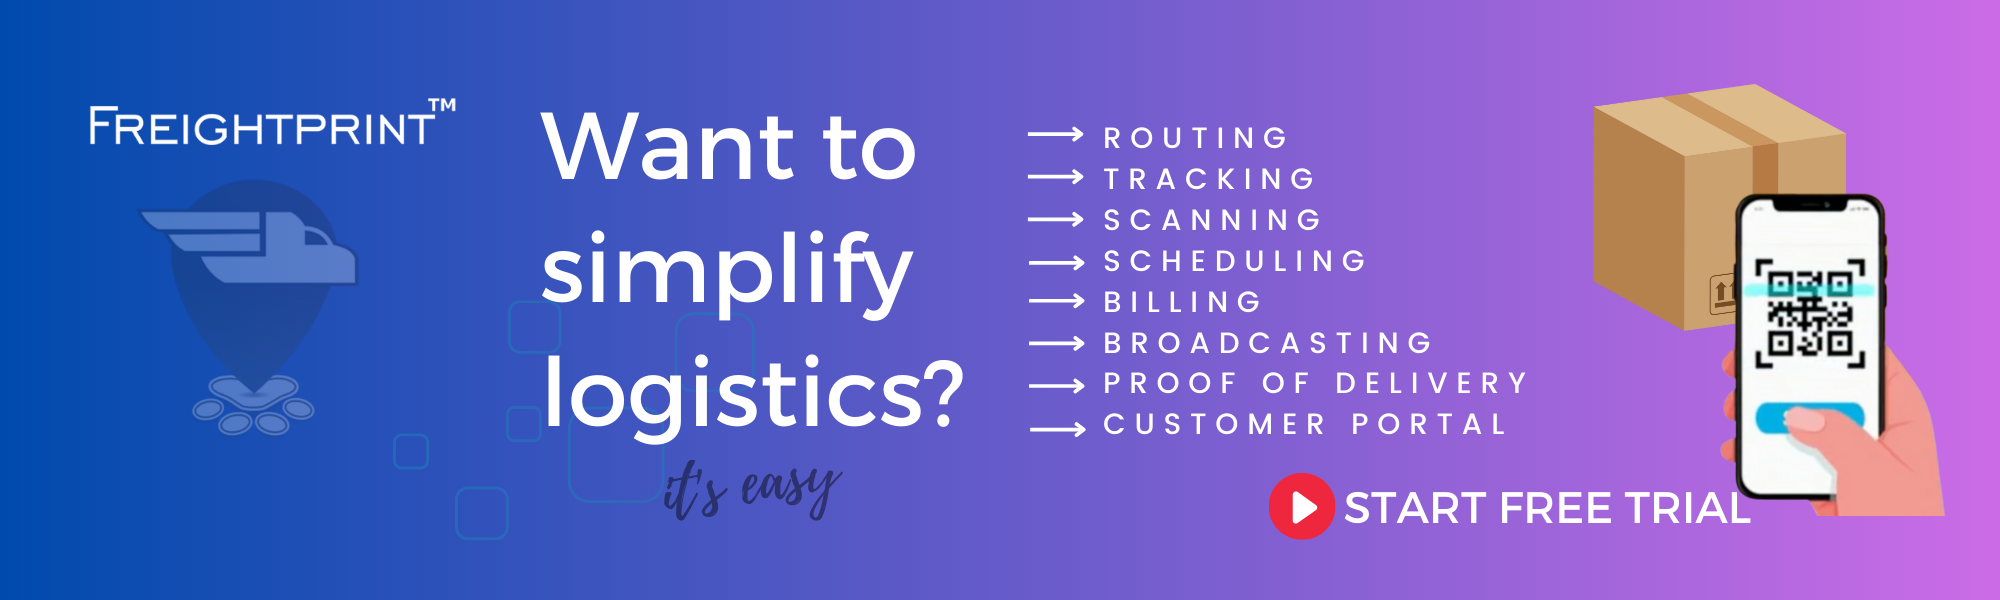 Want to Simplify Logistics